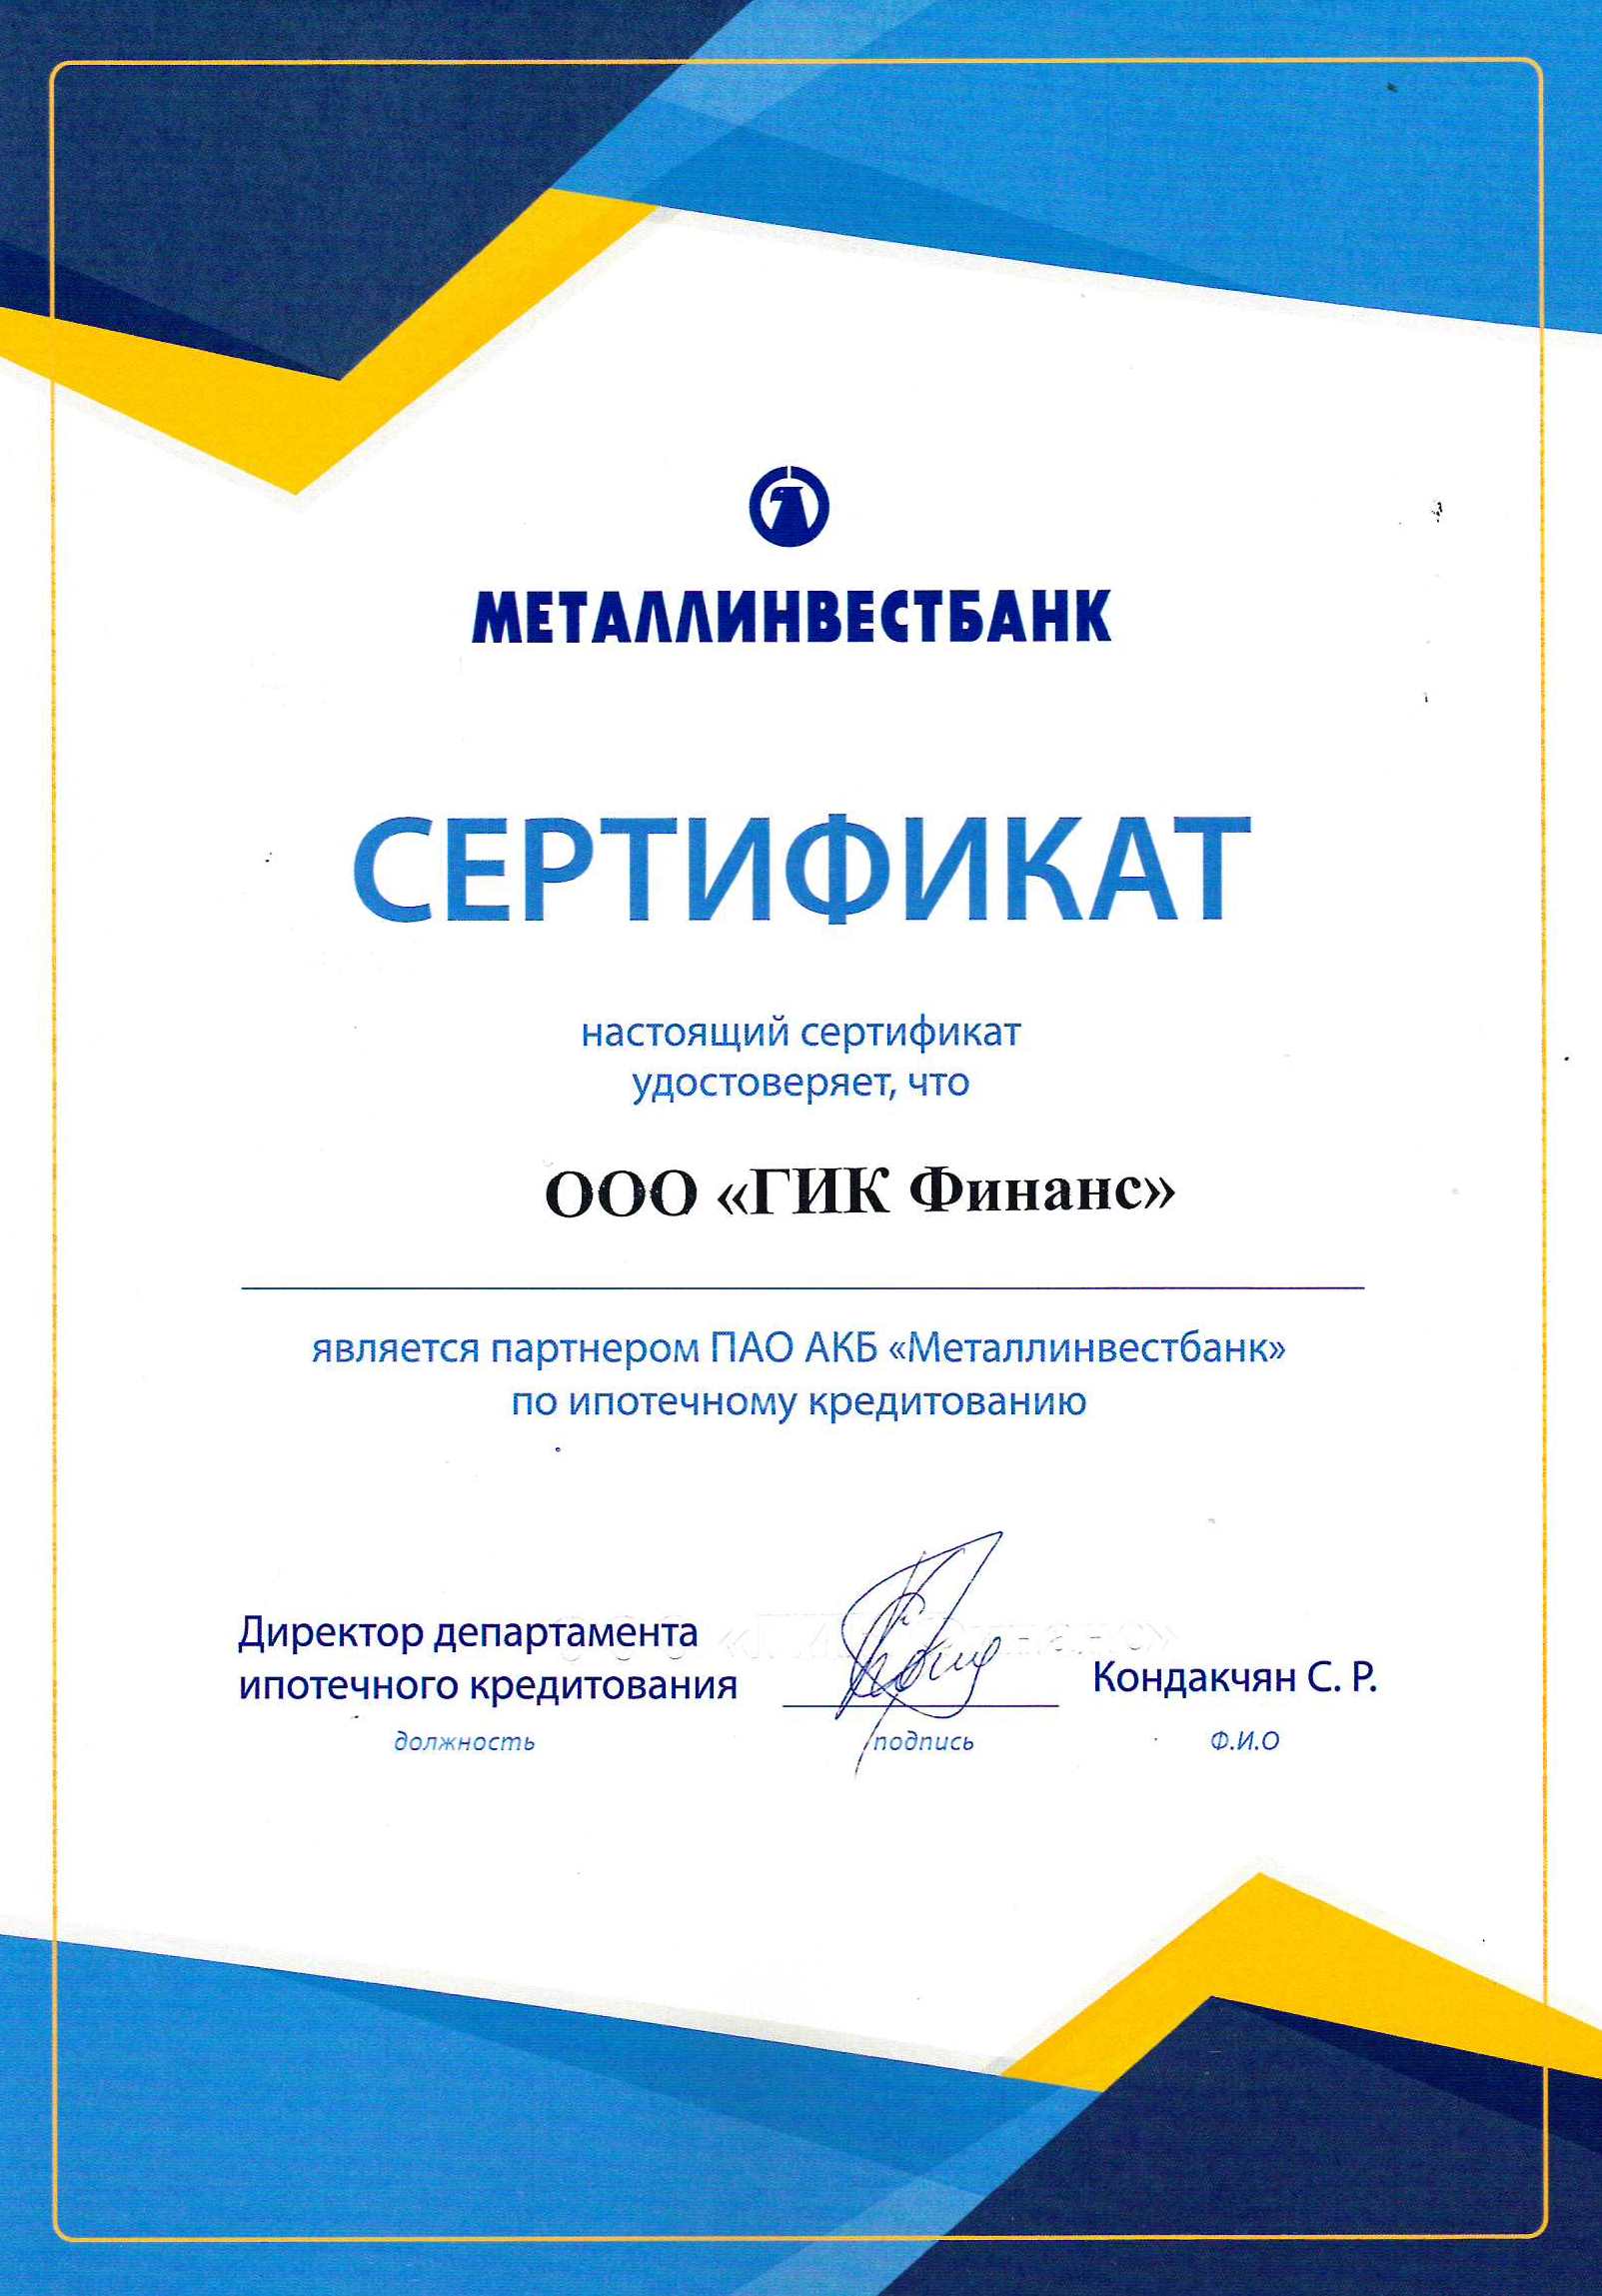 Сертификат о сотрудничестве с ПАО АКБ "Металлинвестбанк"